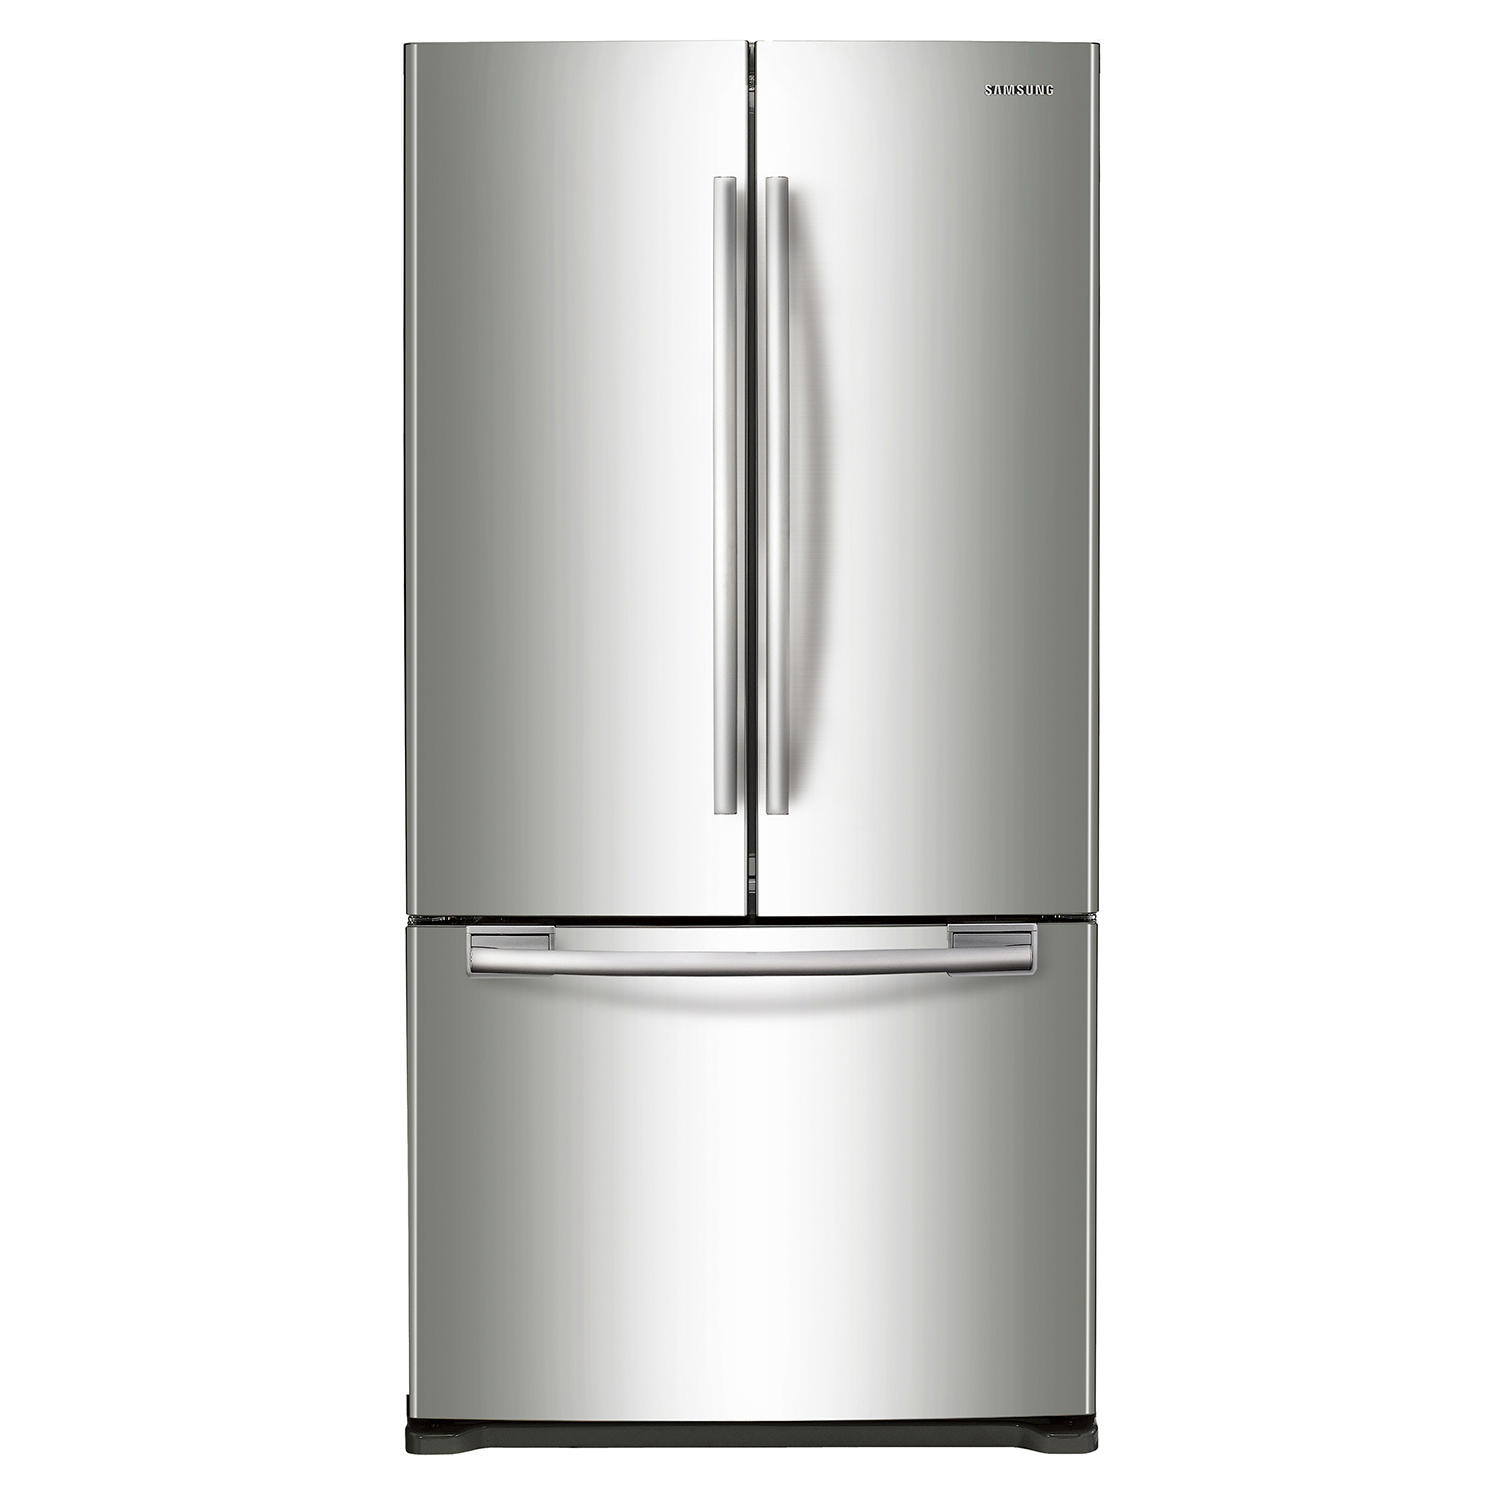 Samsung RF20HFENBSR 33″ 19.4 cu. ft. French Door Refrigerator